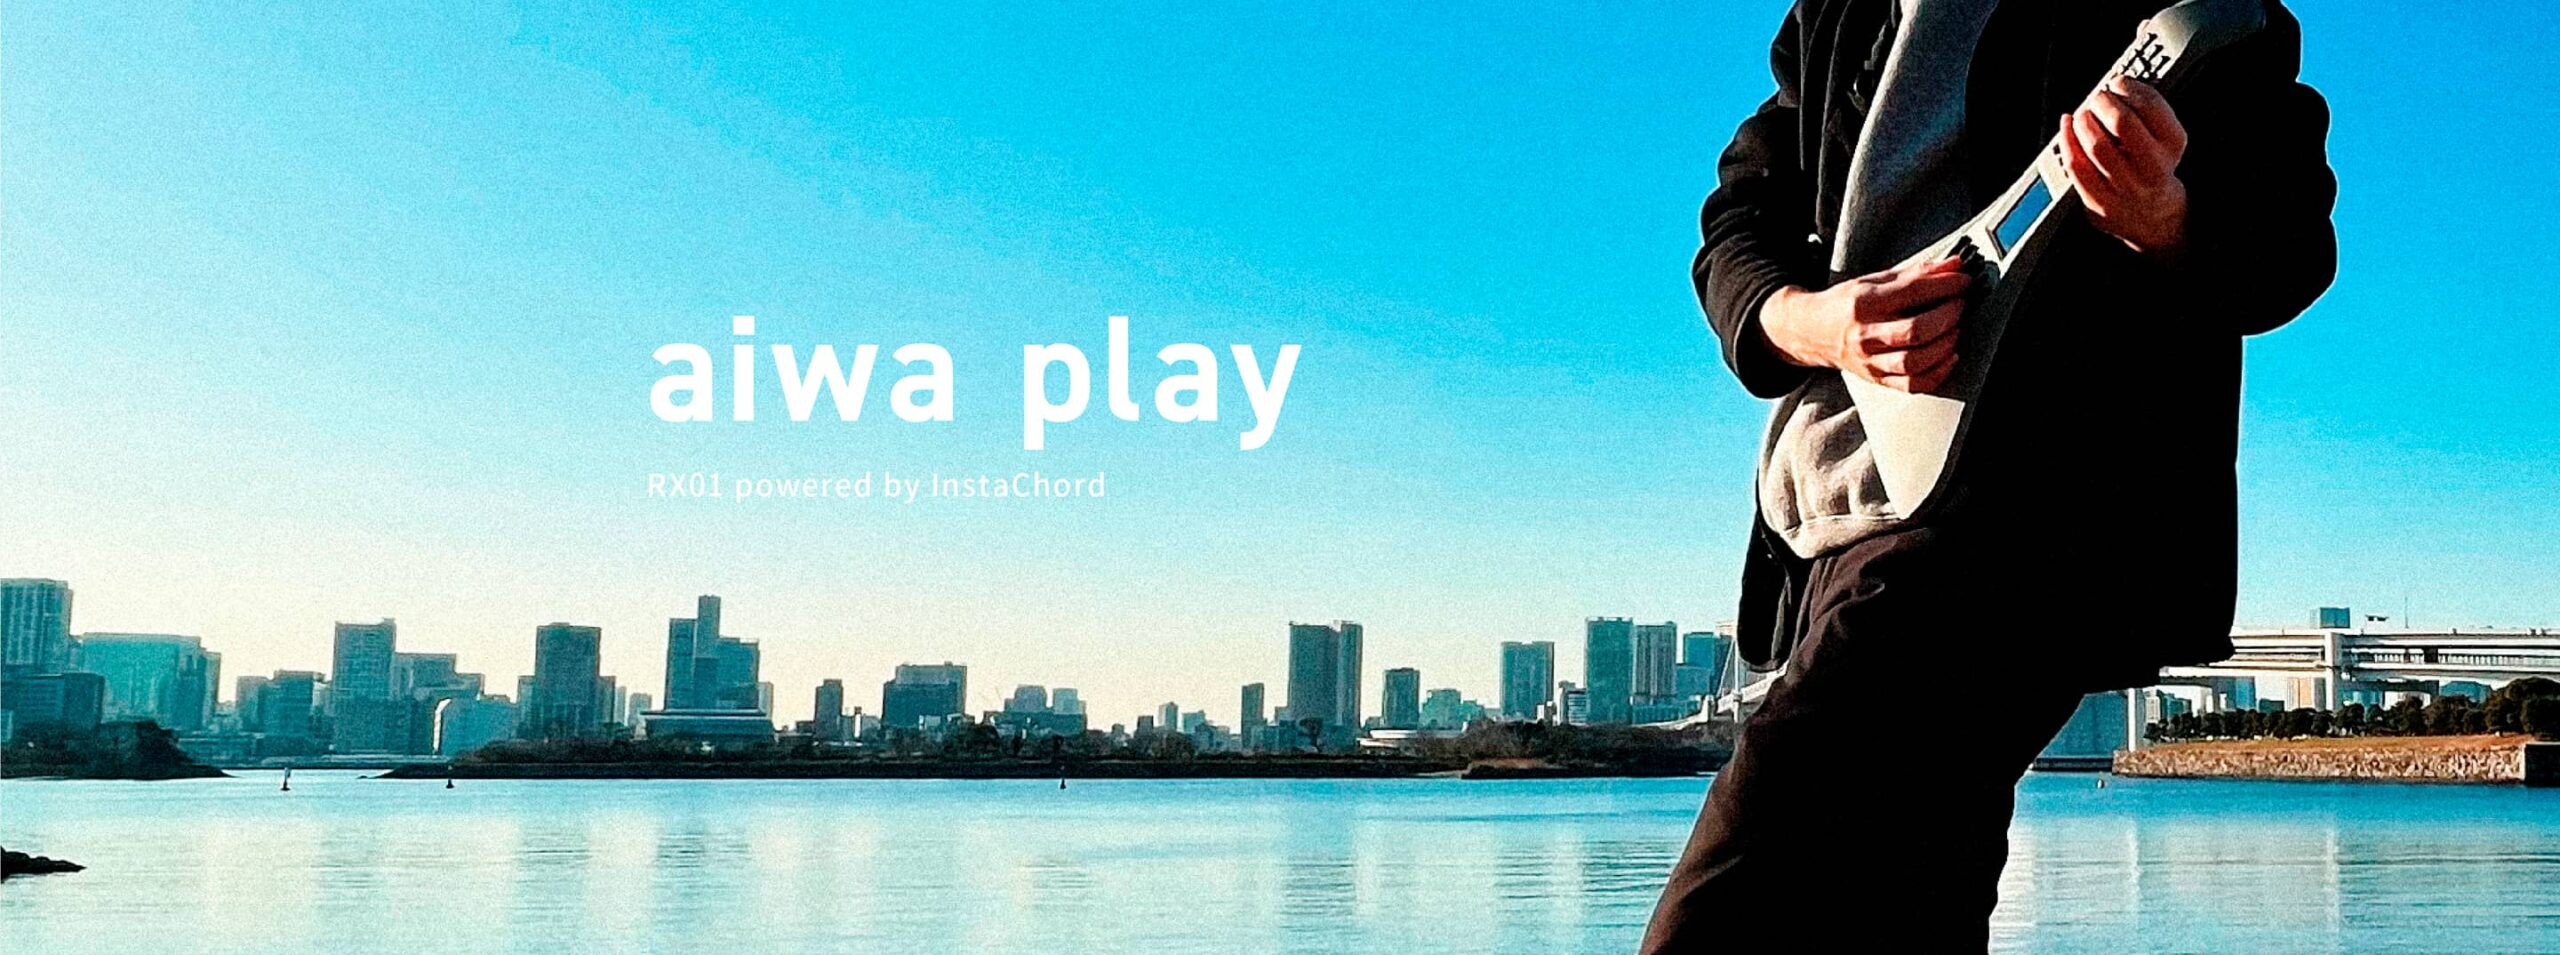 aiwa play RX01